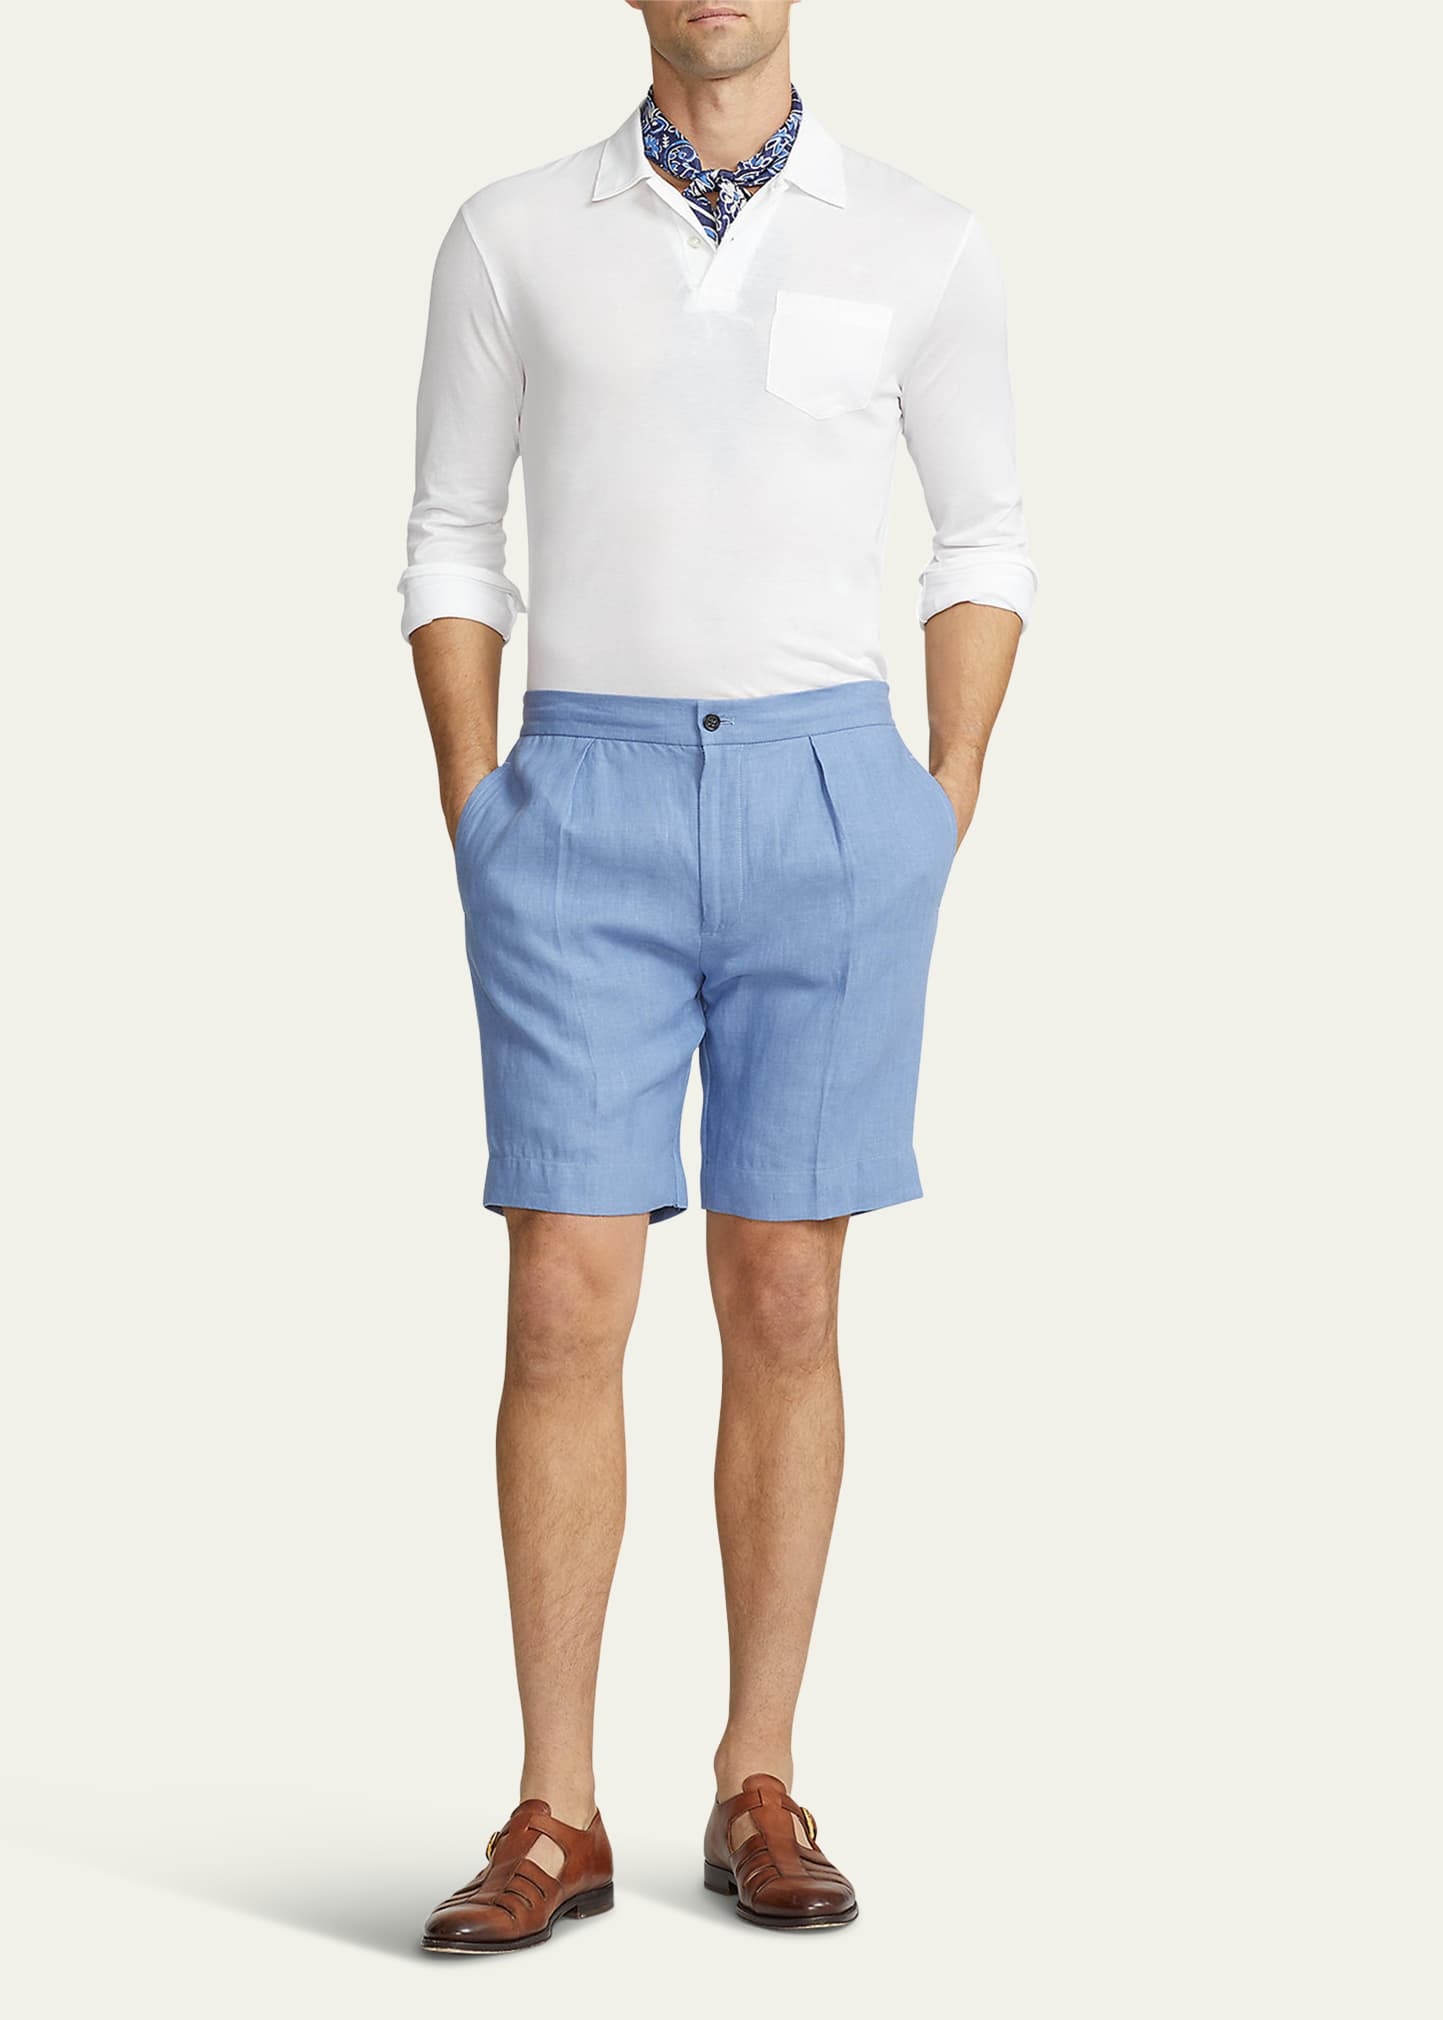 Men's Luxury Lisle Polo Shirt - 2